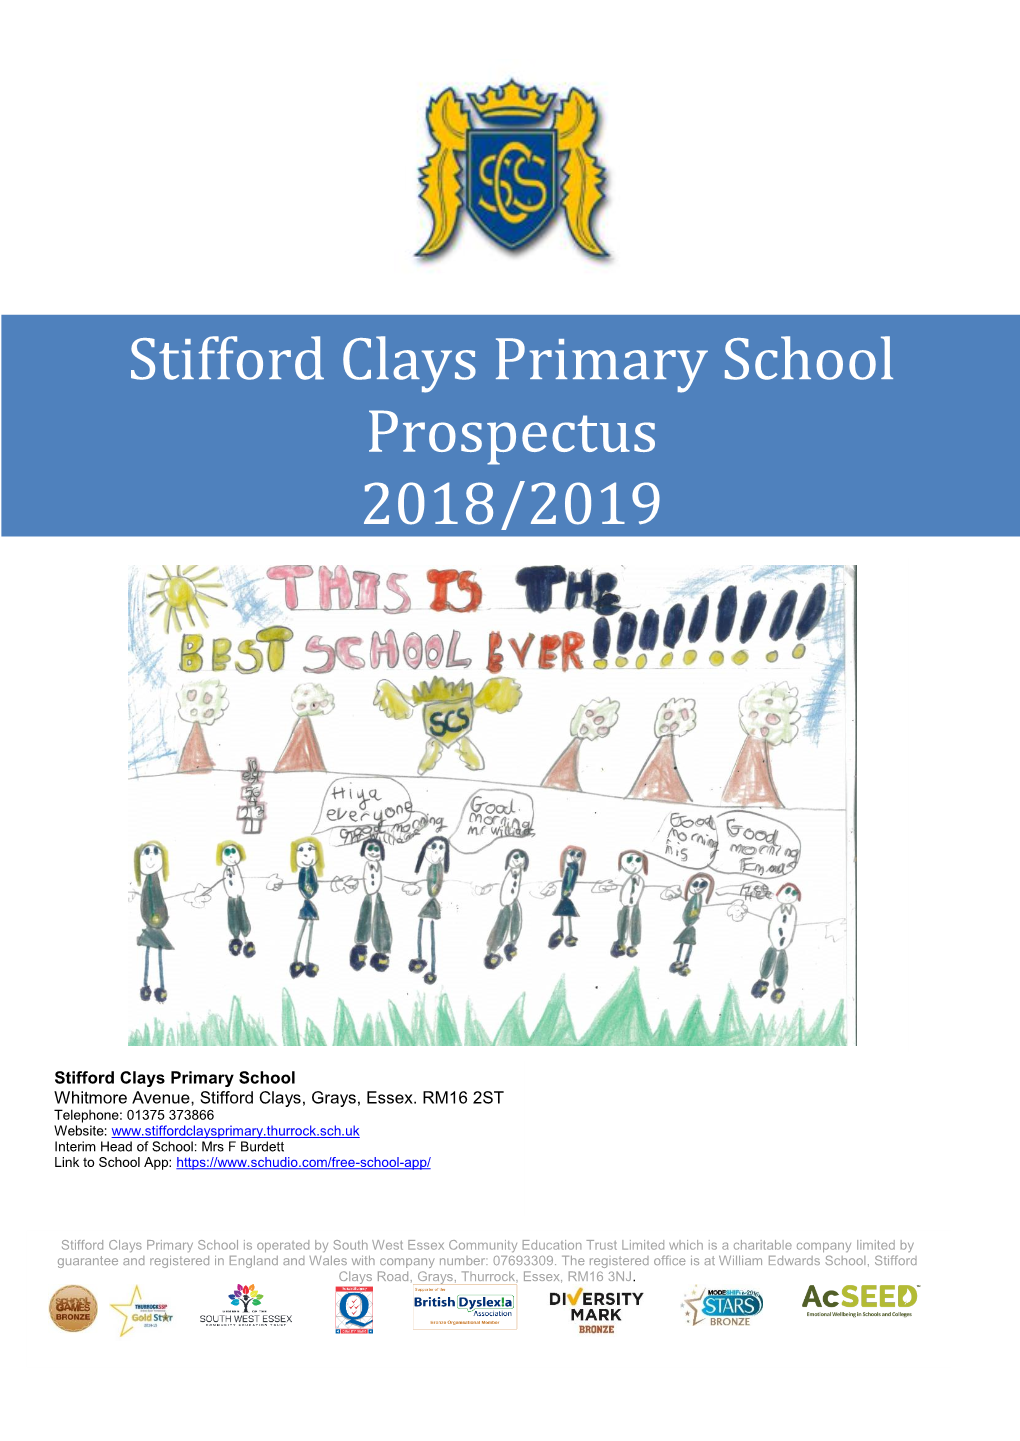 Stifford Clays Primary School Prospectus 2018/2019